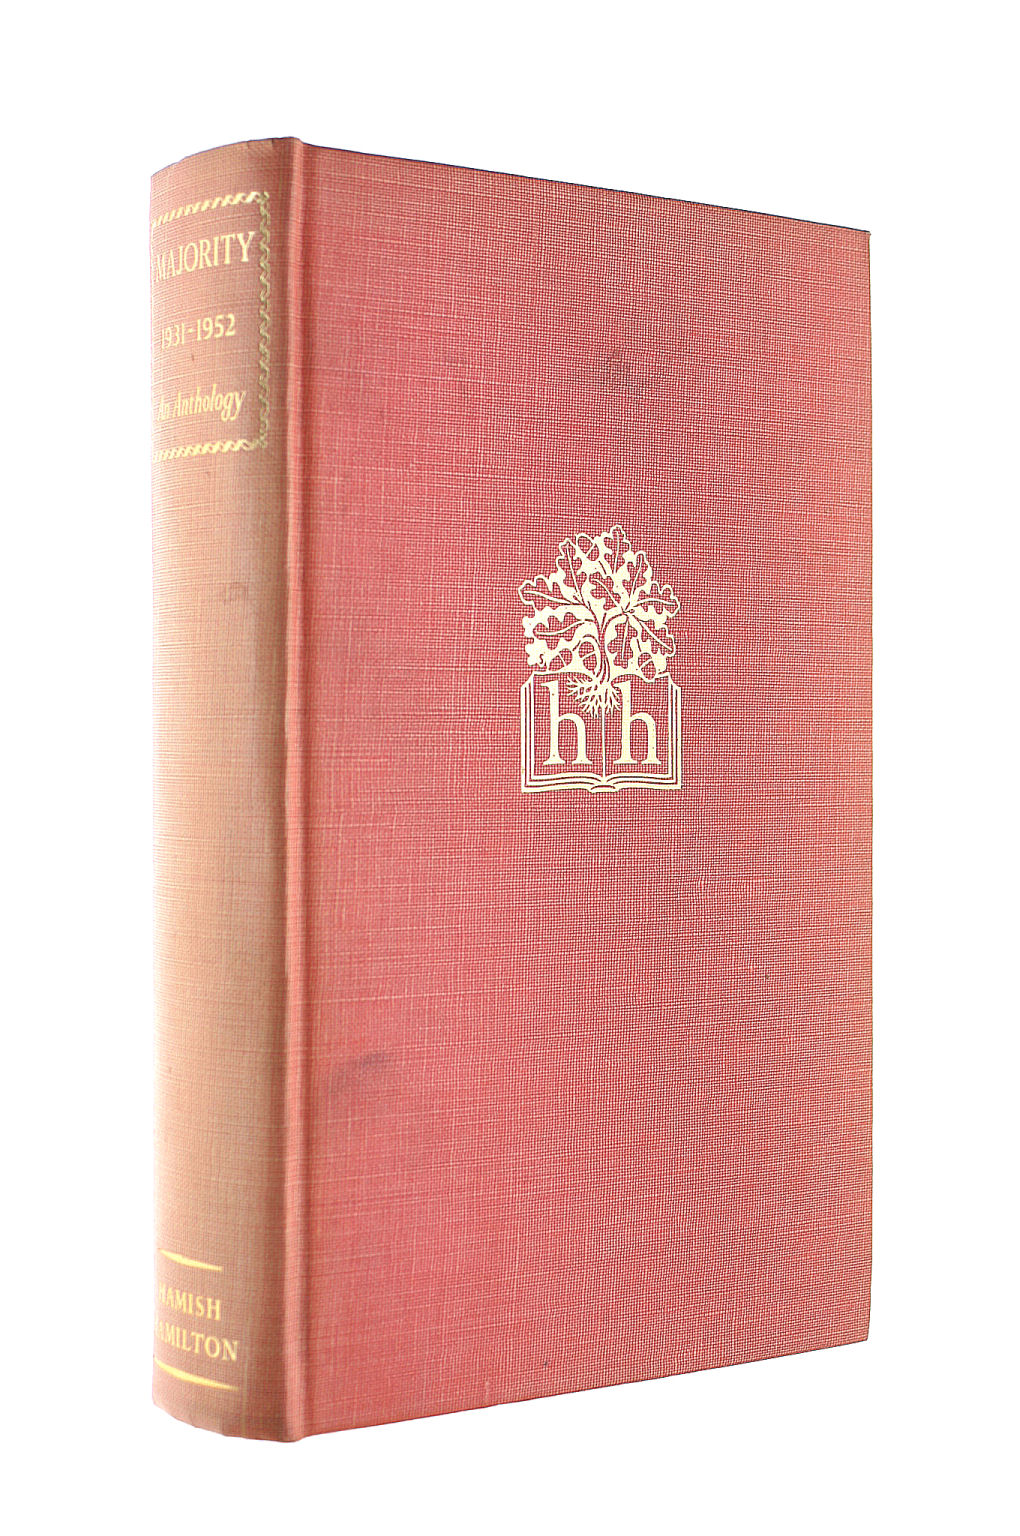 VARIOUS - Majority - 1931 - 1952 (An Anthology of 21 Years of Publishing By Hamish Hamilton)